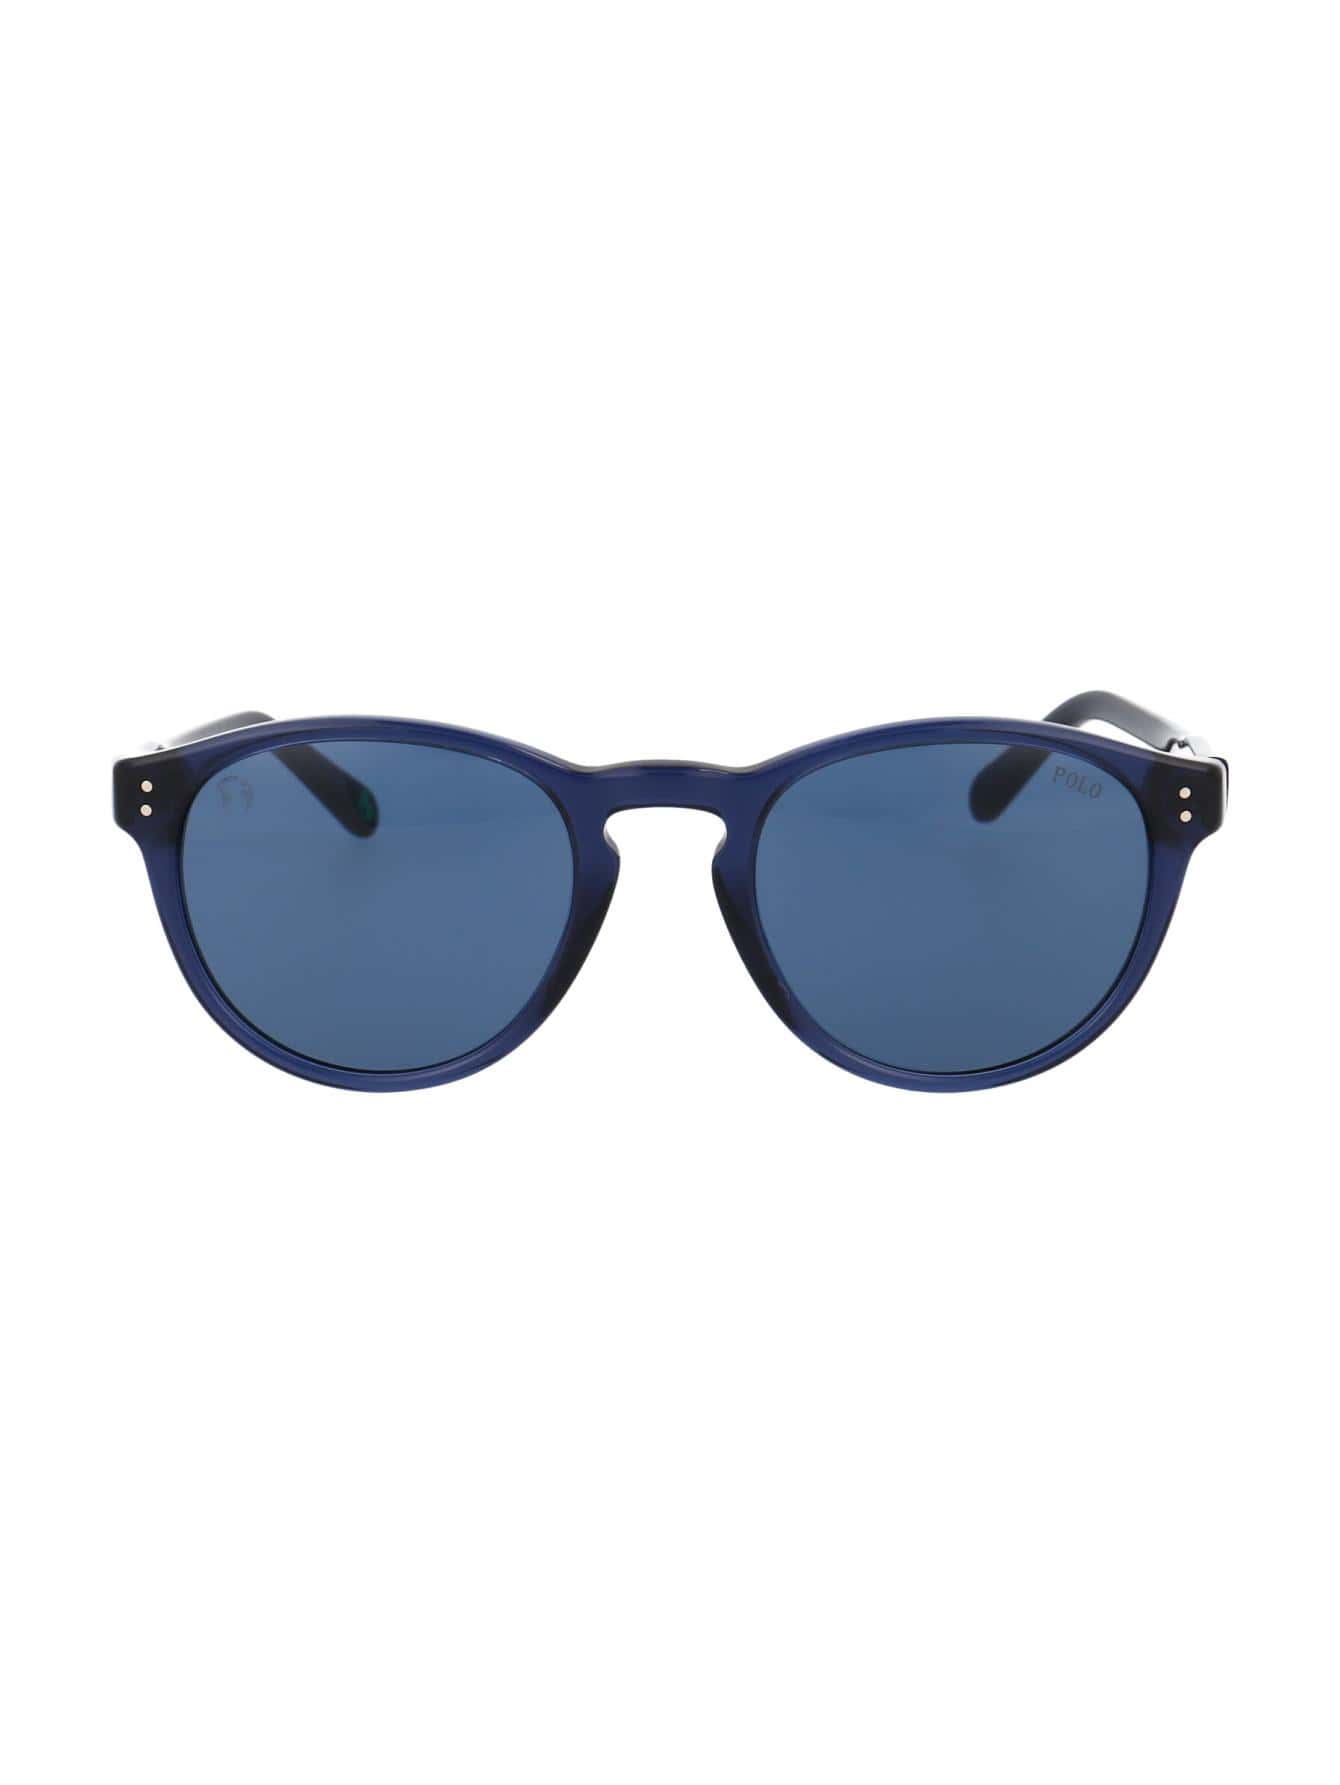 Мужские солнцезащитные очки Polo Ralph Lauren СИНИЕ 0PH4172595580, синий очки солнцезащитные ralph anderl panto chrome blue